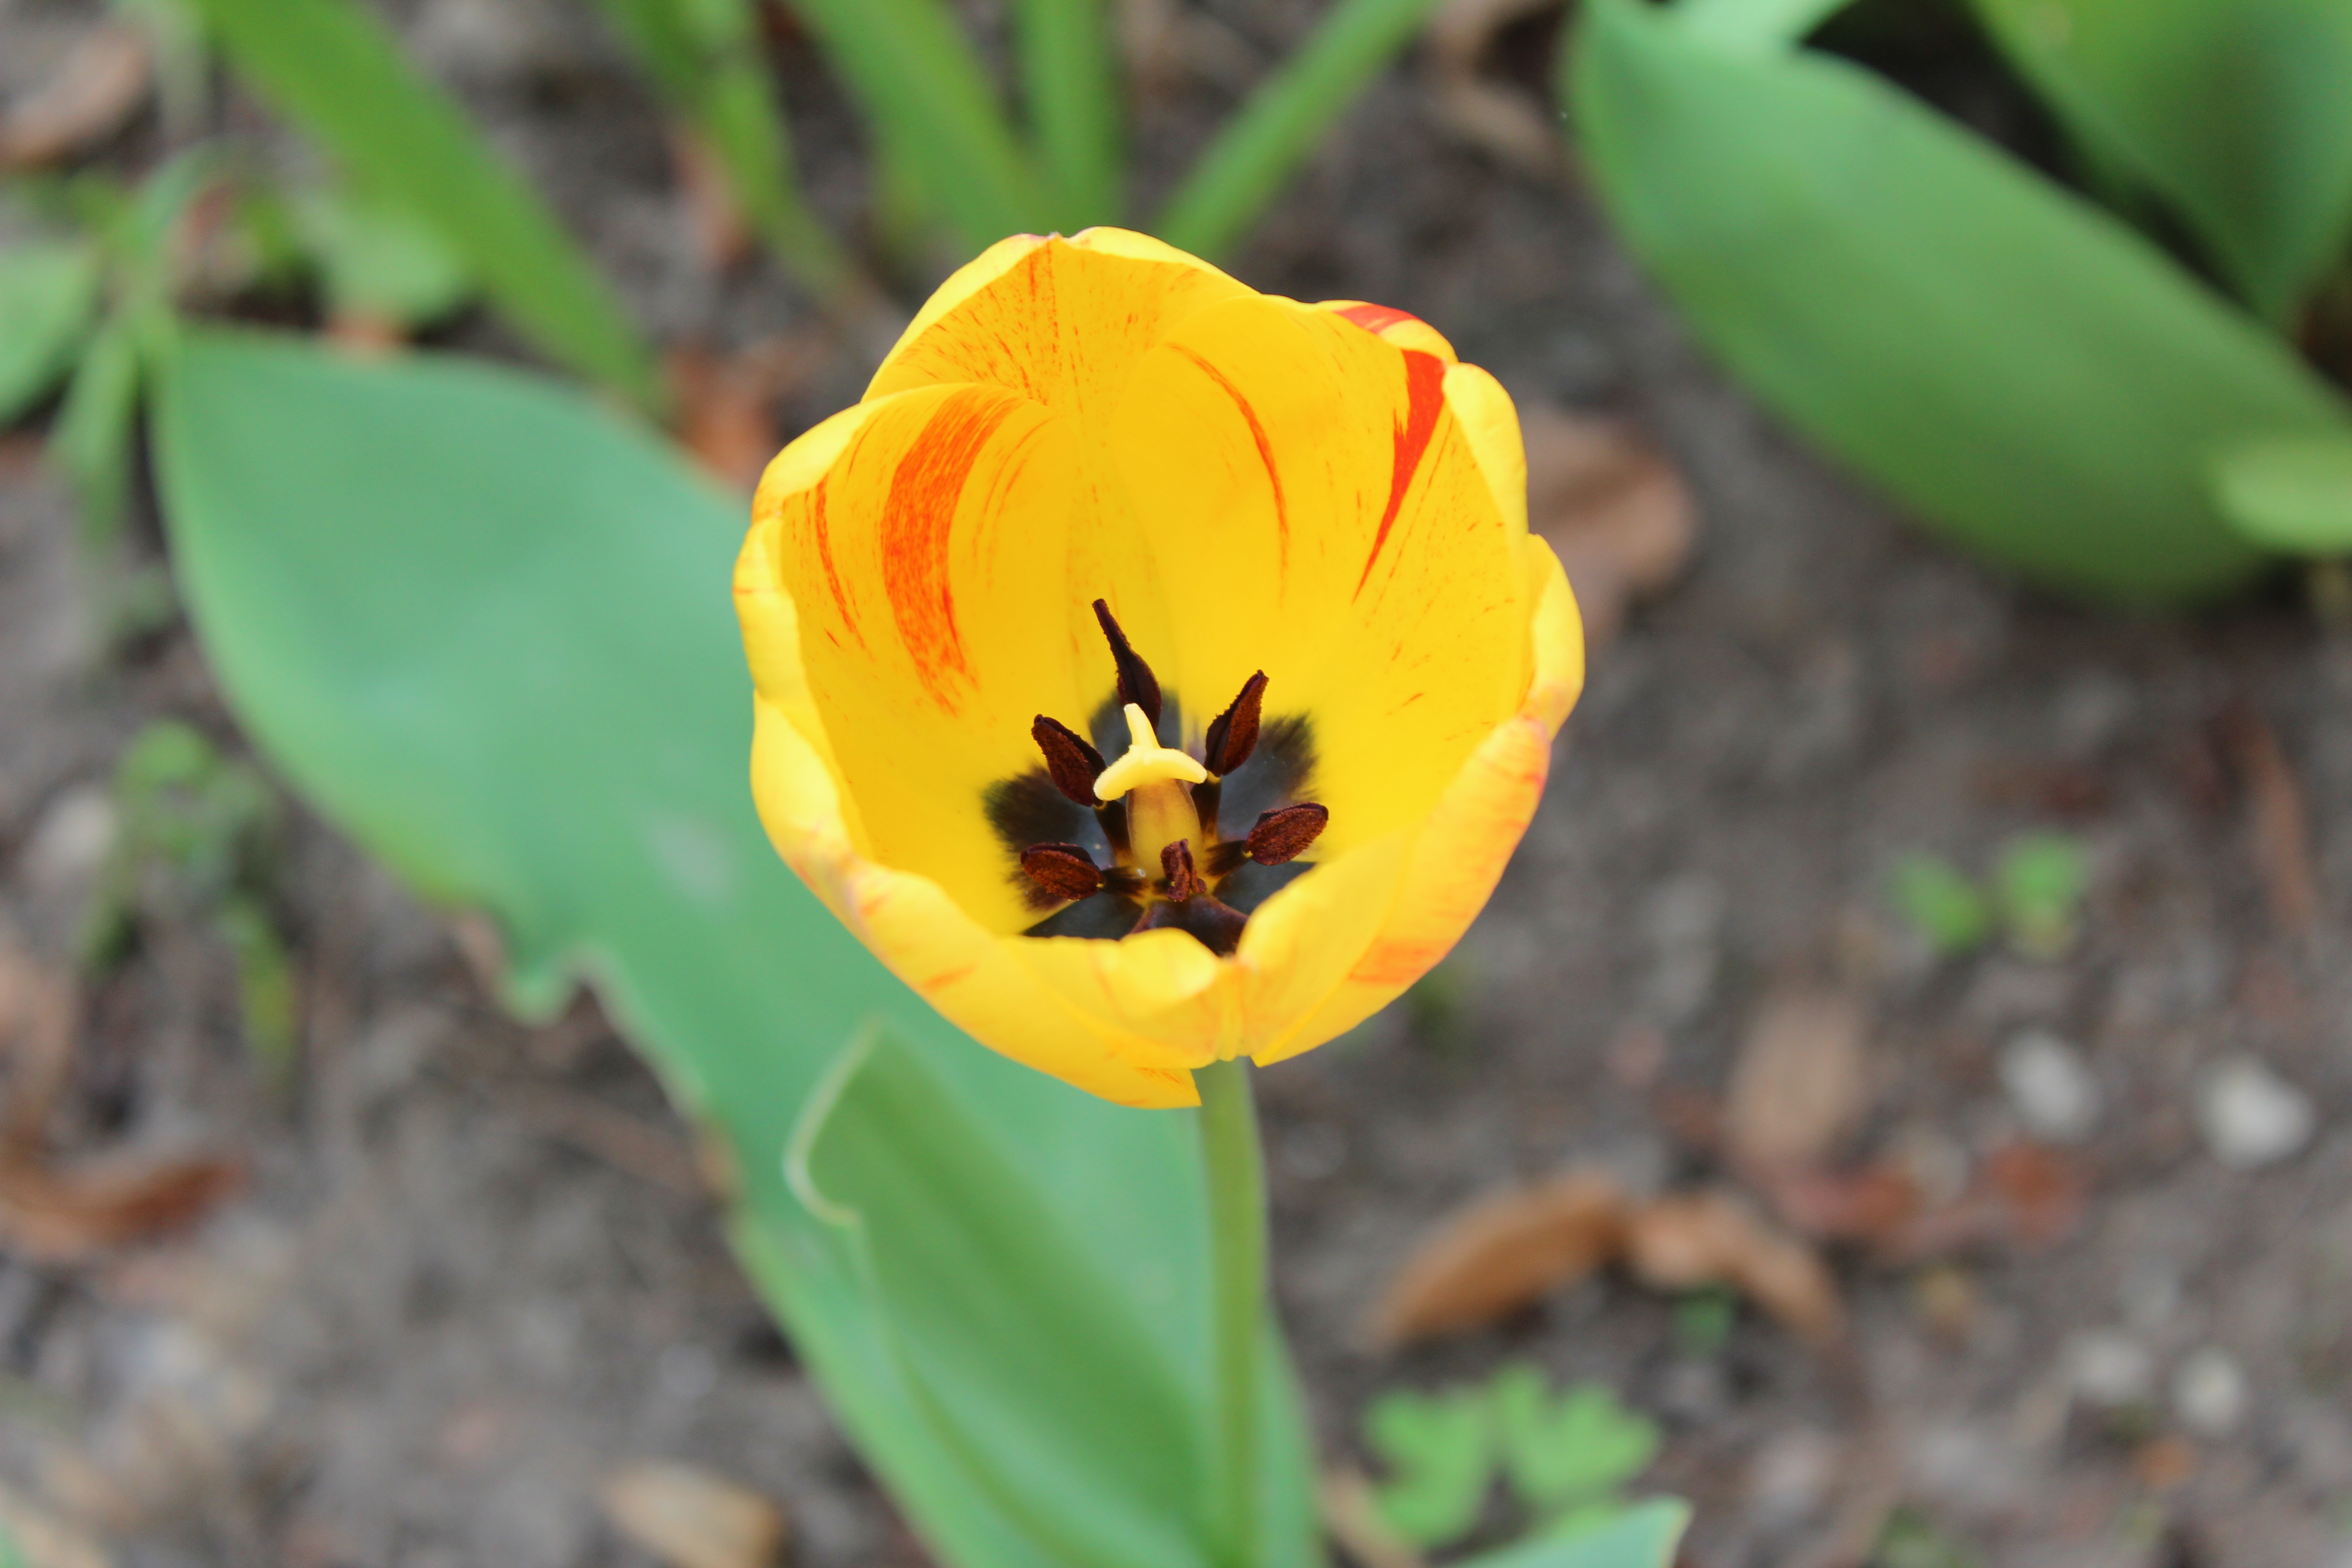 File:Yellow tulip gelbe tulpe.jpg - Wikimedia Commons